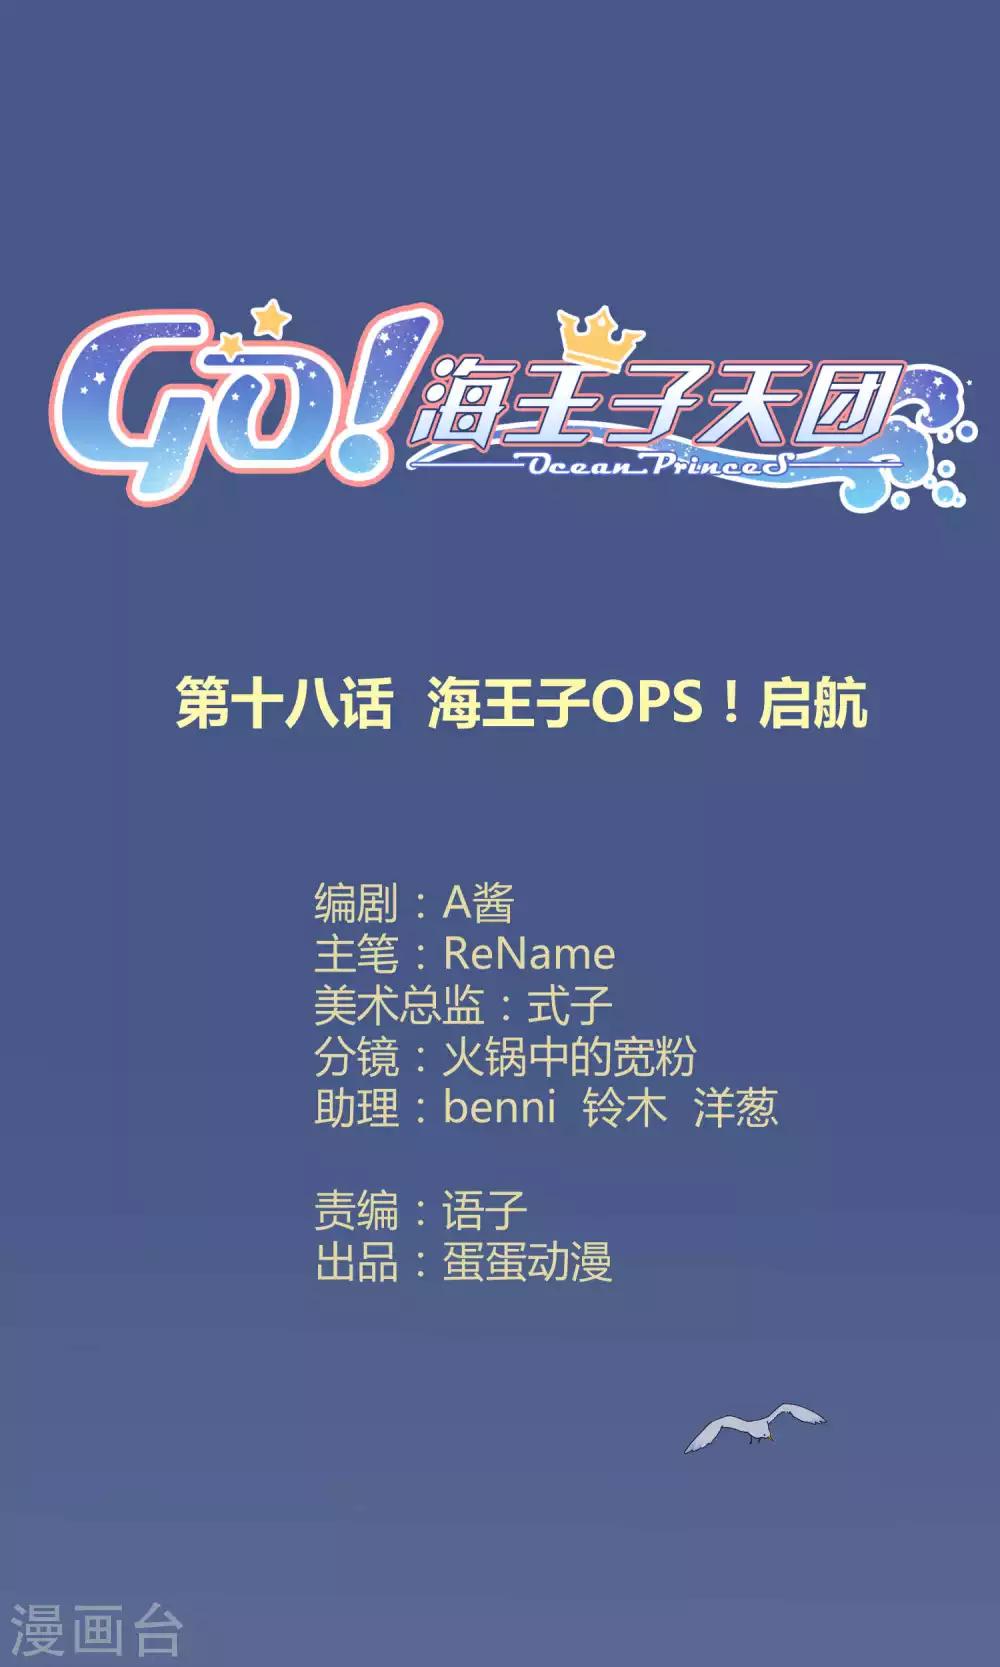 Go!海王子天團 - 第18話 海王子OPS啓航 - 1